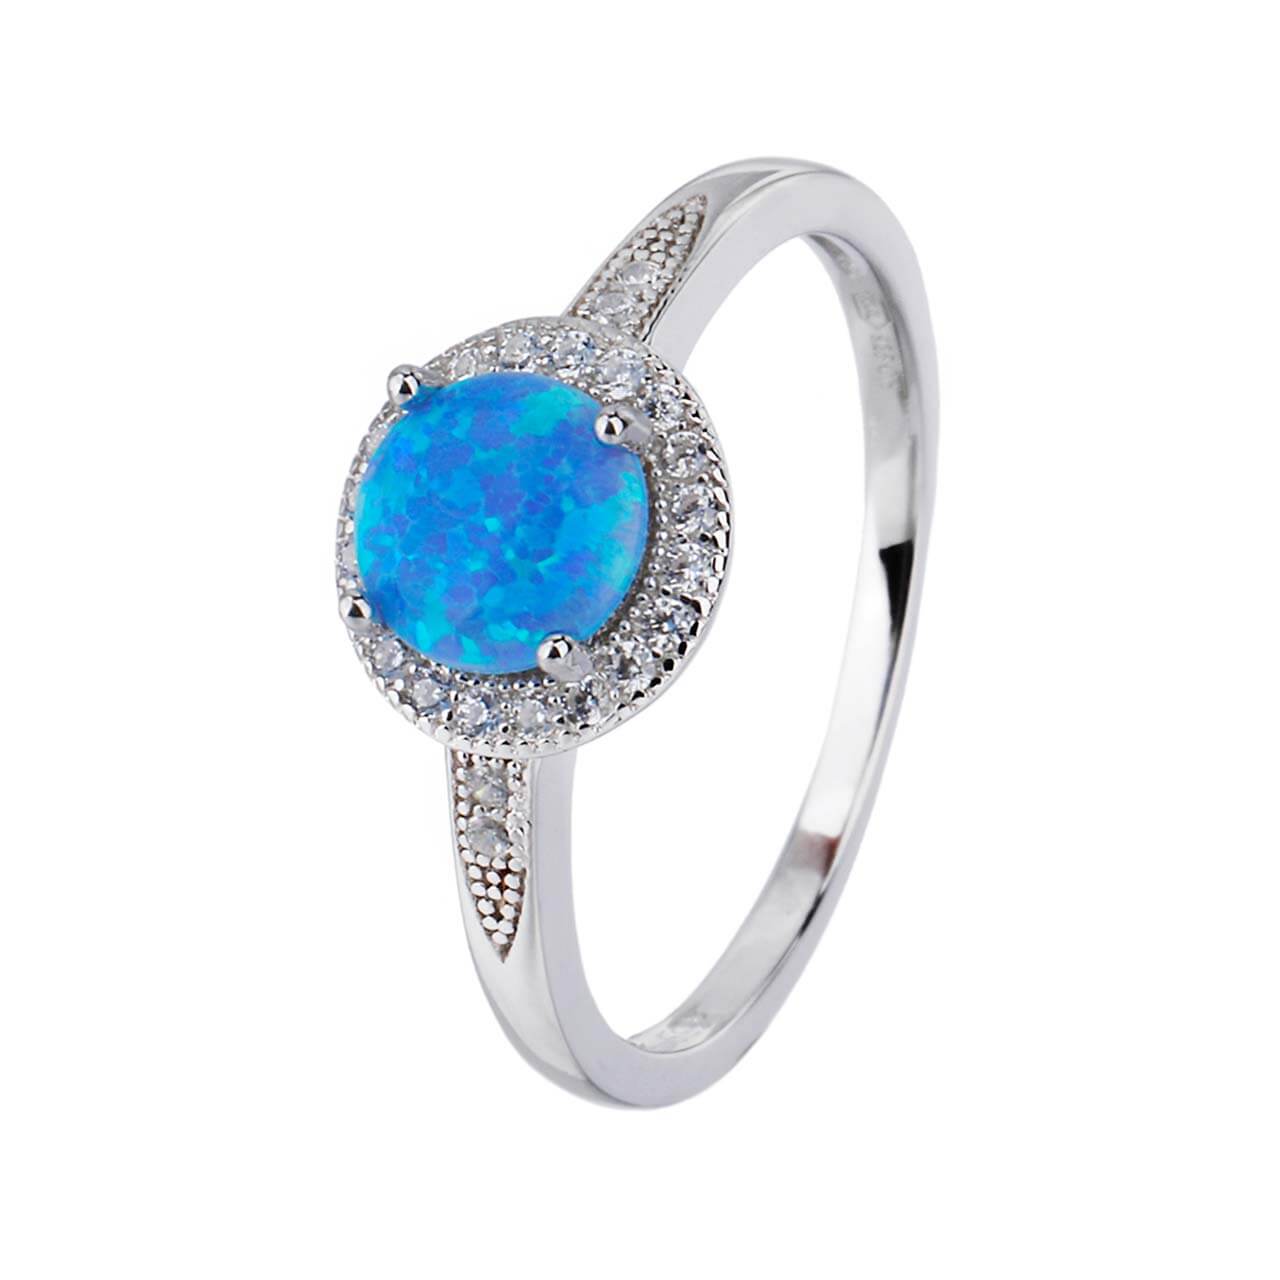 Stříbrný prsten SOLITÉR modrý OPÁL Velikost prstenu: 61 Ag 925/1000